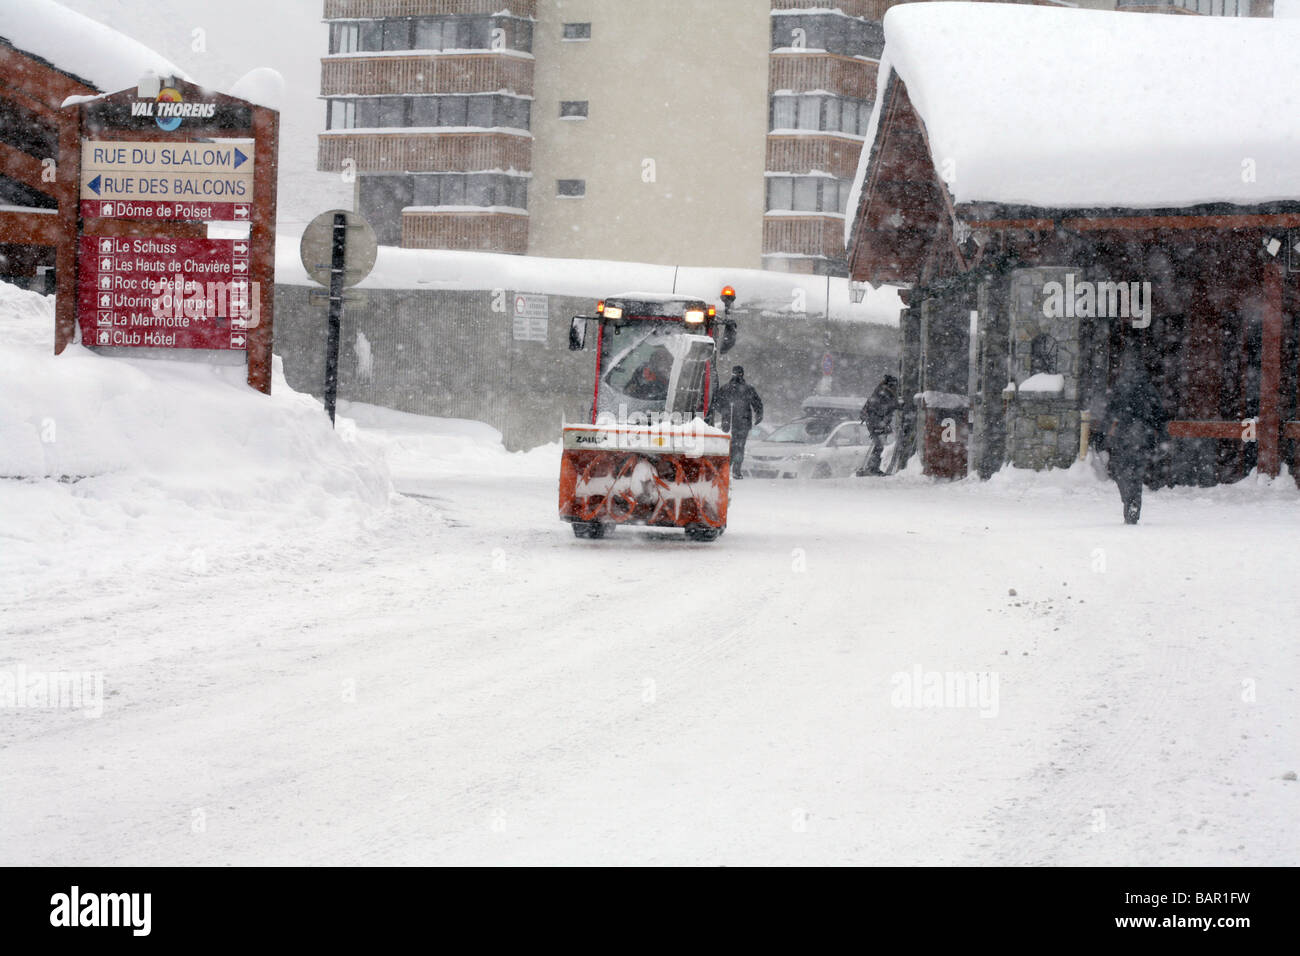 Snowplough clearing snow, Val Thorens, Three Valleys, Savoie, France Stock Photo